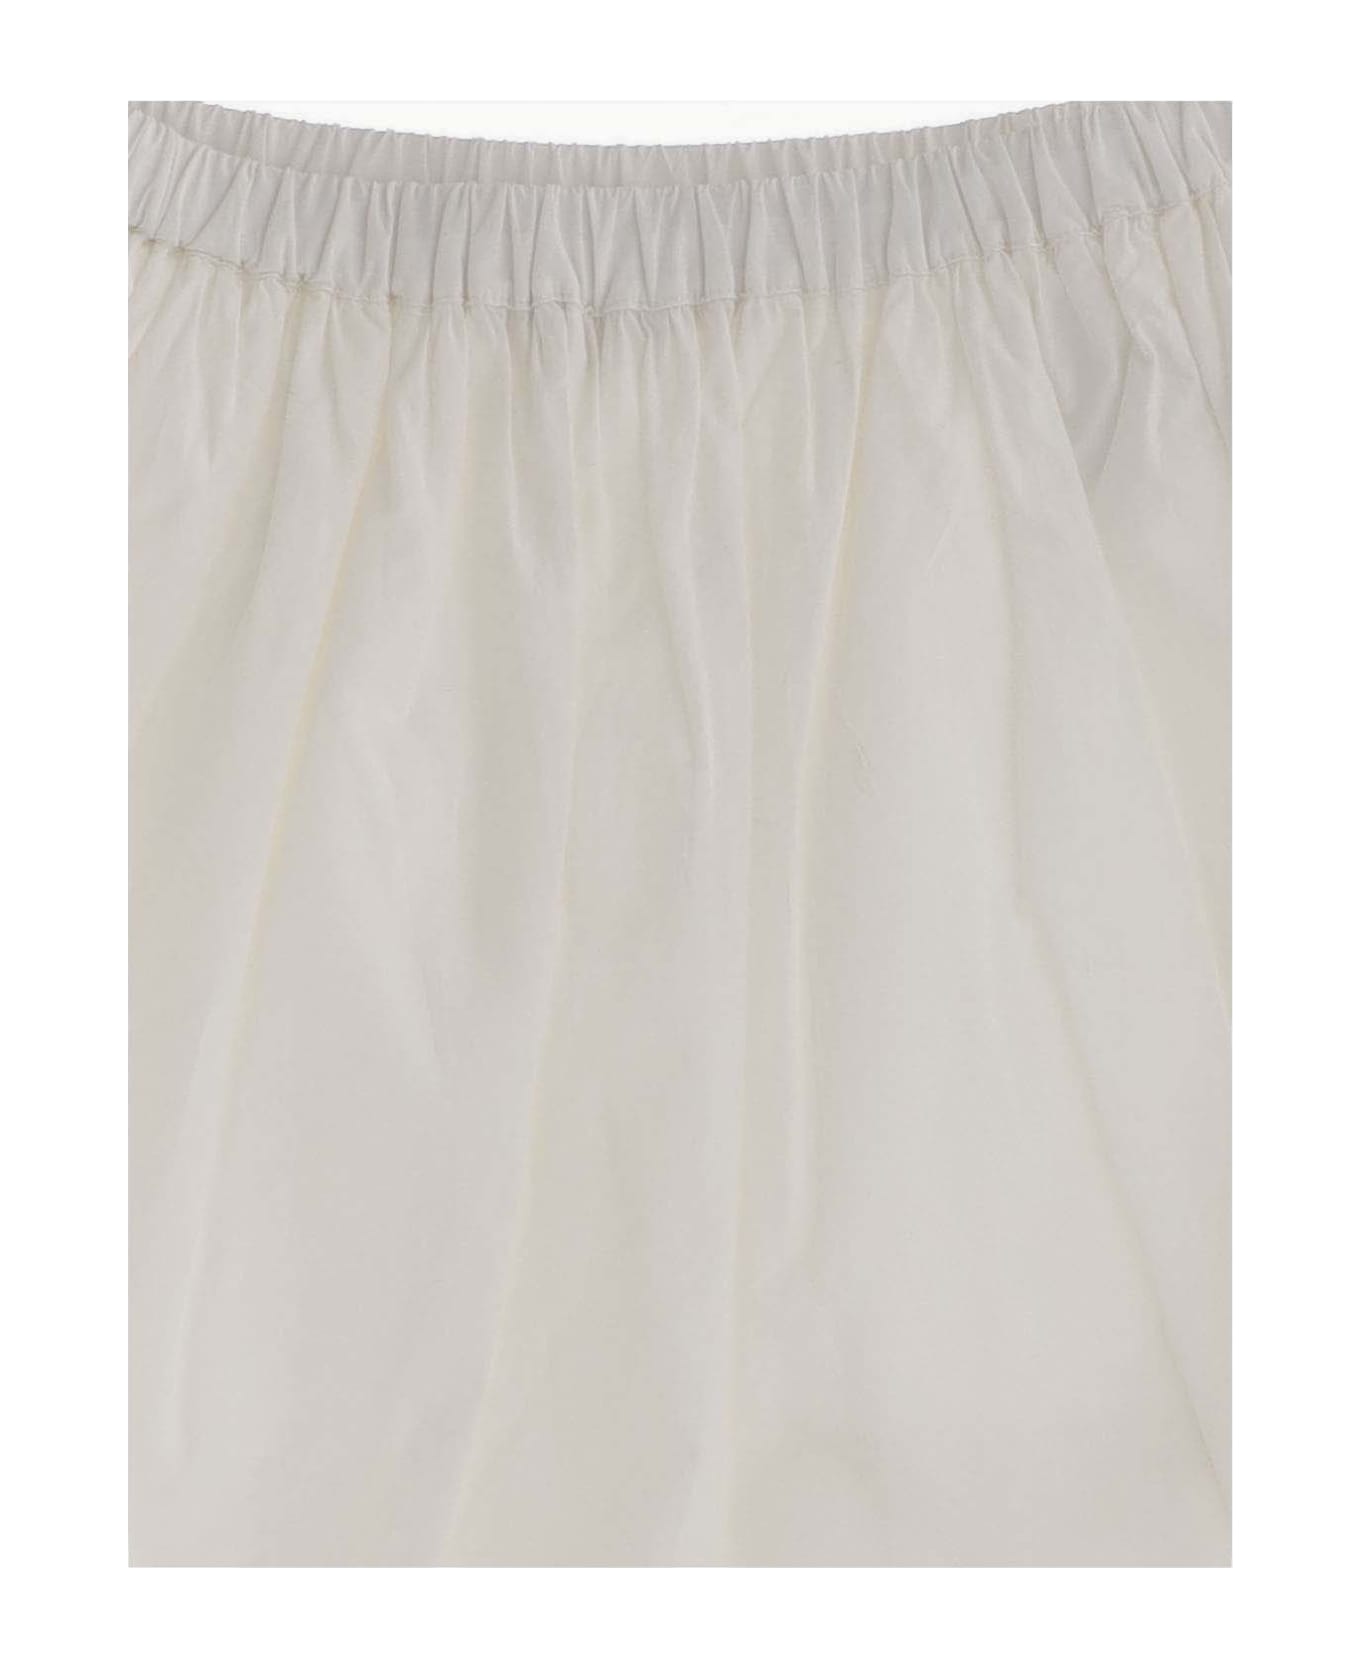 Bonpoint Flora Skirt - White ボトムス